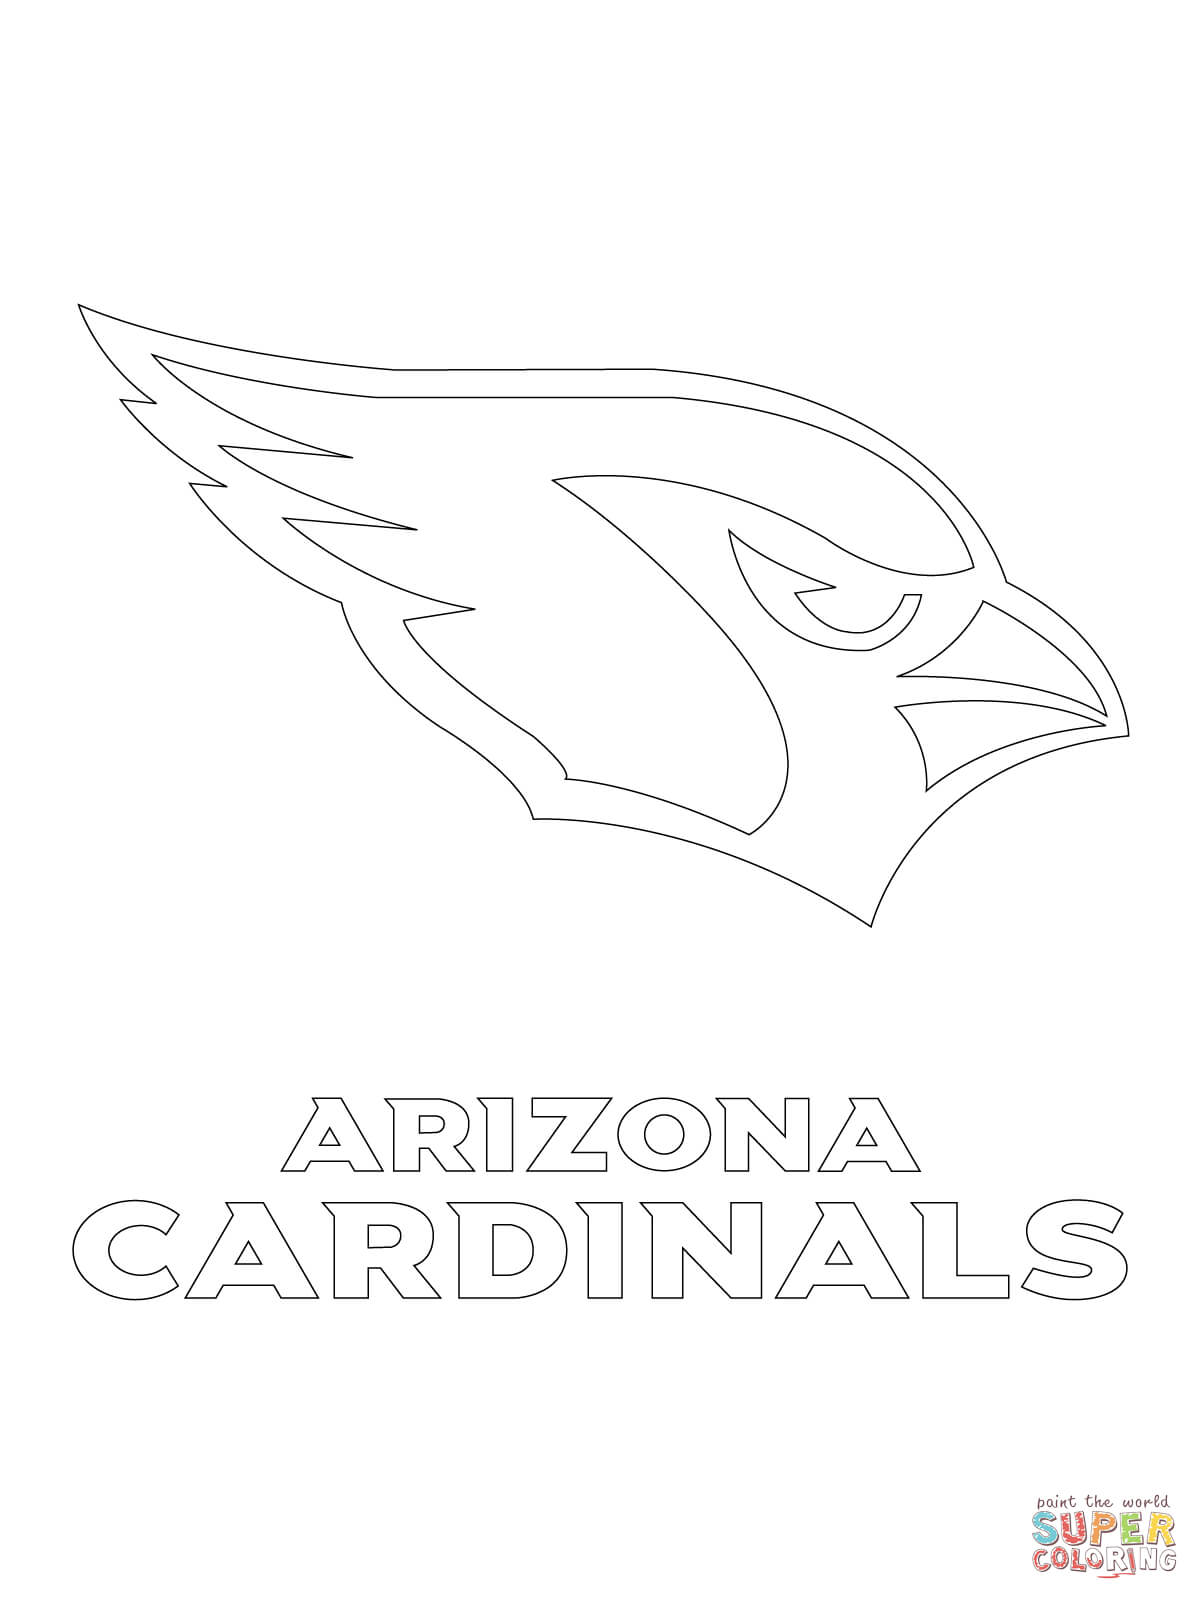 Arizona Cardinals Logo coloring page